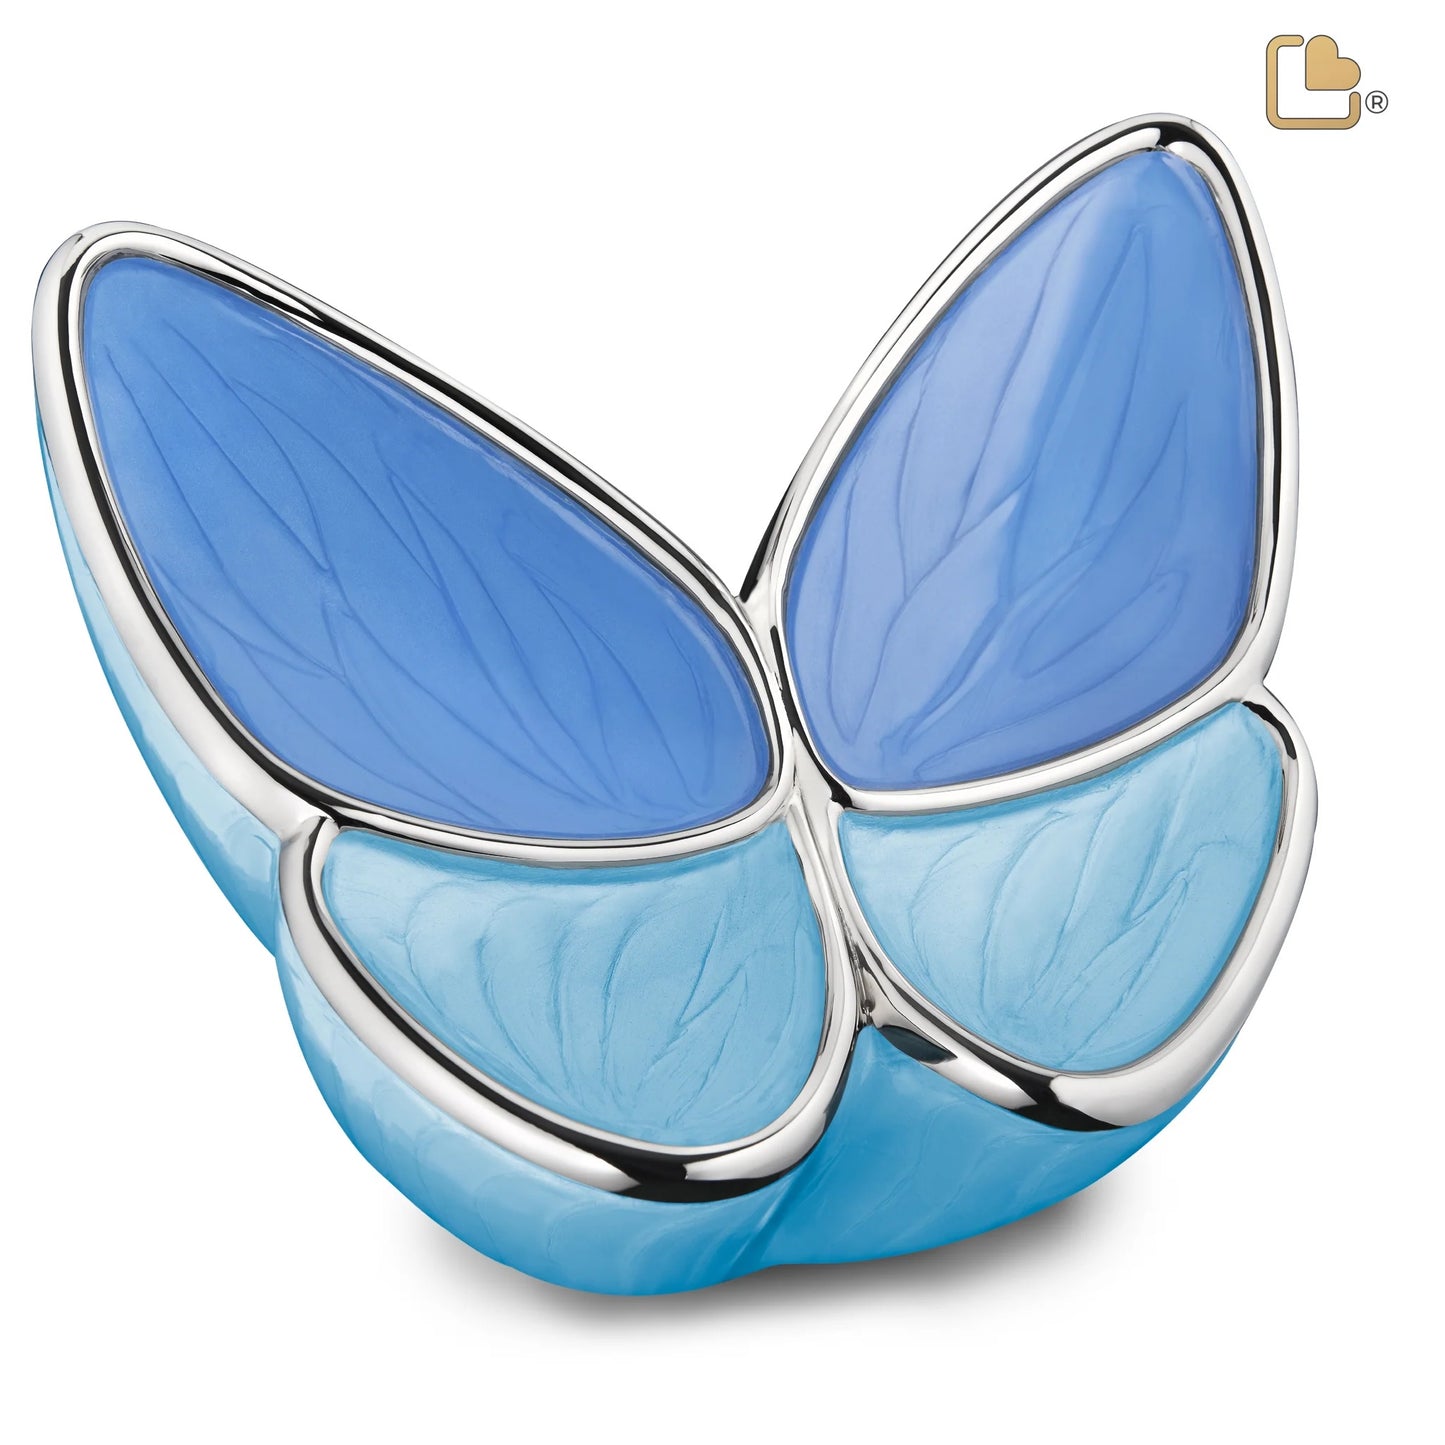 Brass butterfly urn with blue enamel finish.